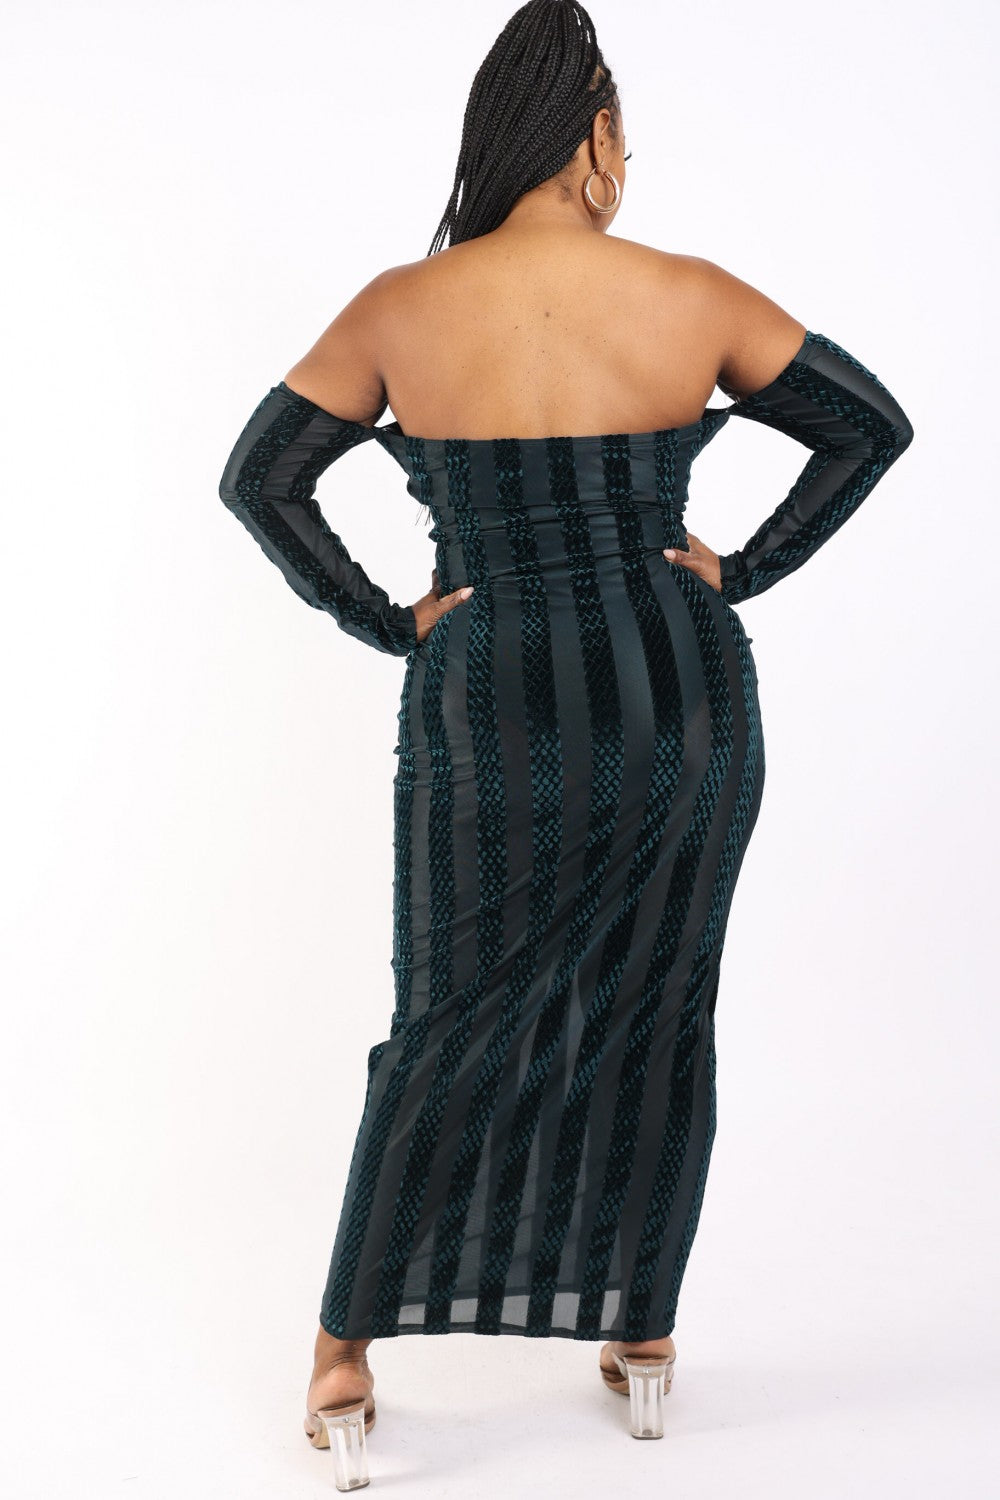 Striped Velvet Off Shoulder Dress - lolaluxeshop